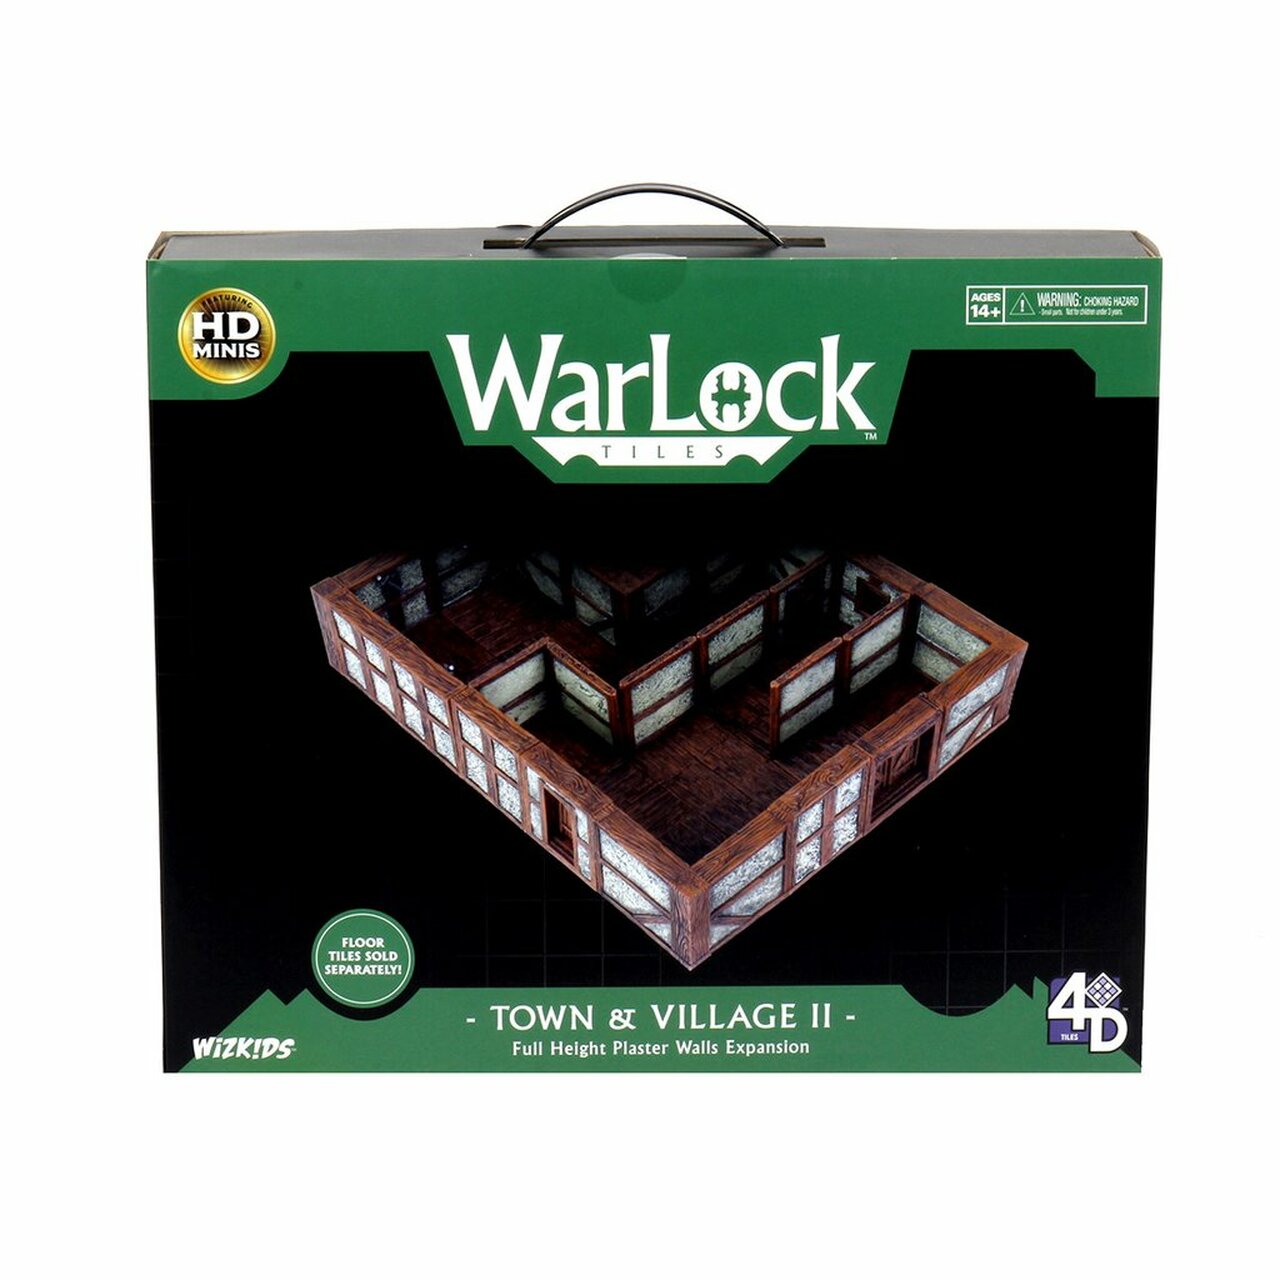 WarLock Tiles - Town & Village II: Full Height Plaster Walls Expansion